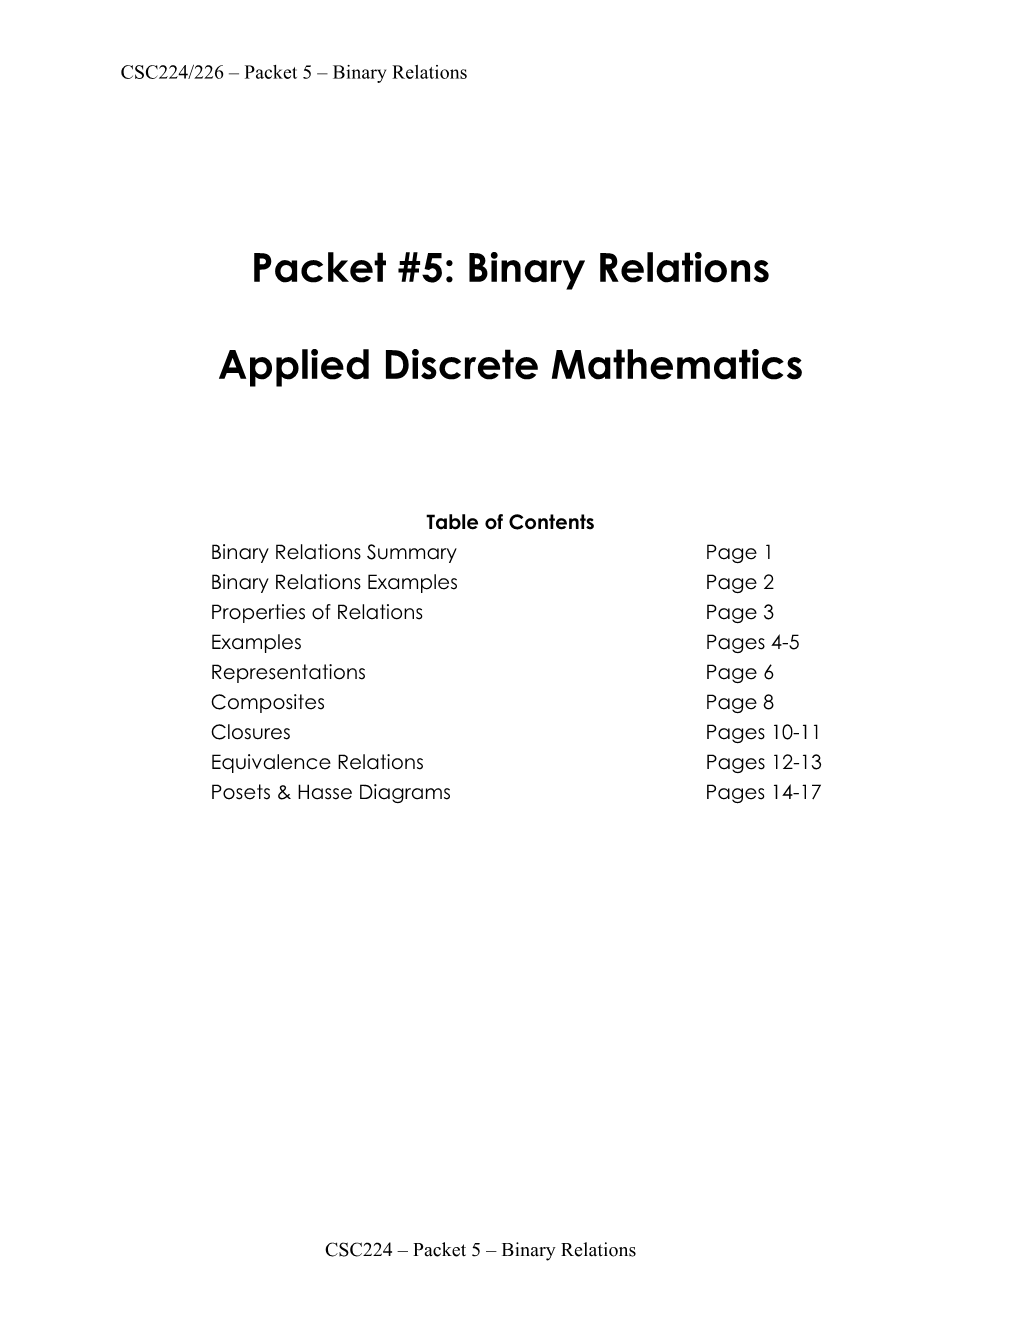 Packet #5: Binary Relations Applied Discrete Mathematics